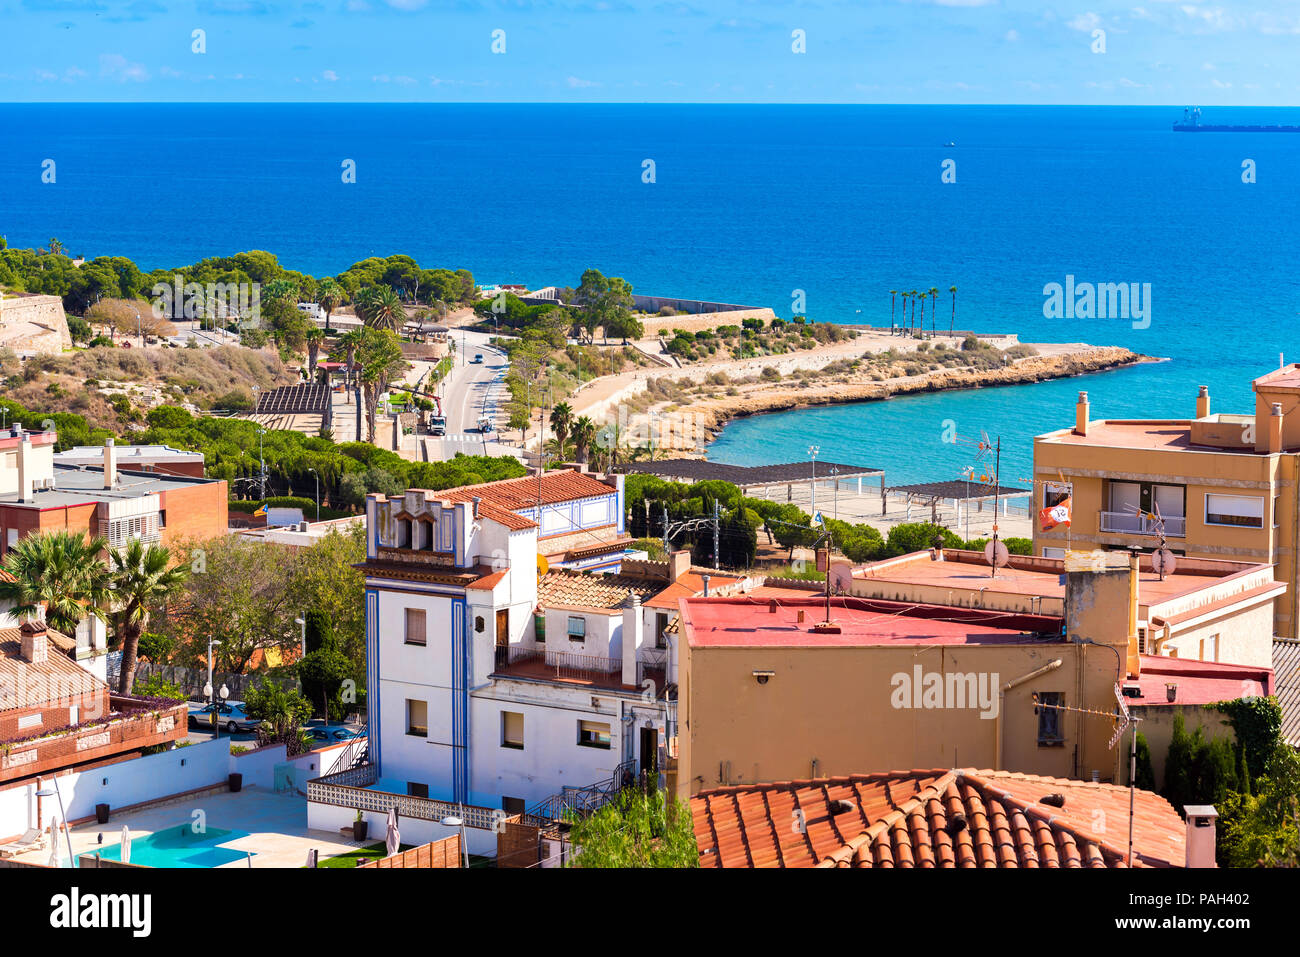 The coastline of the Costa Dorada, Tarragona, Catalunya, Spain. Copy space for text Stock Photo